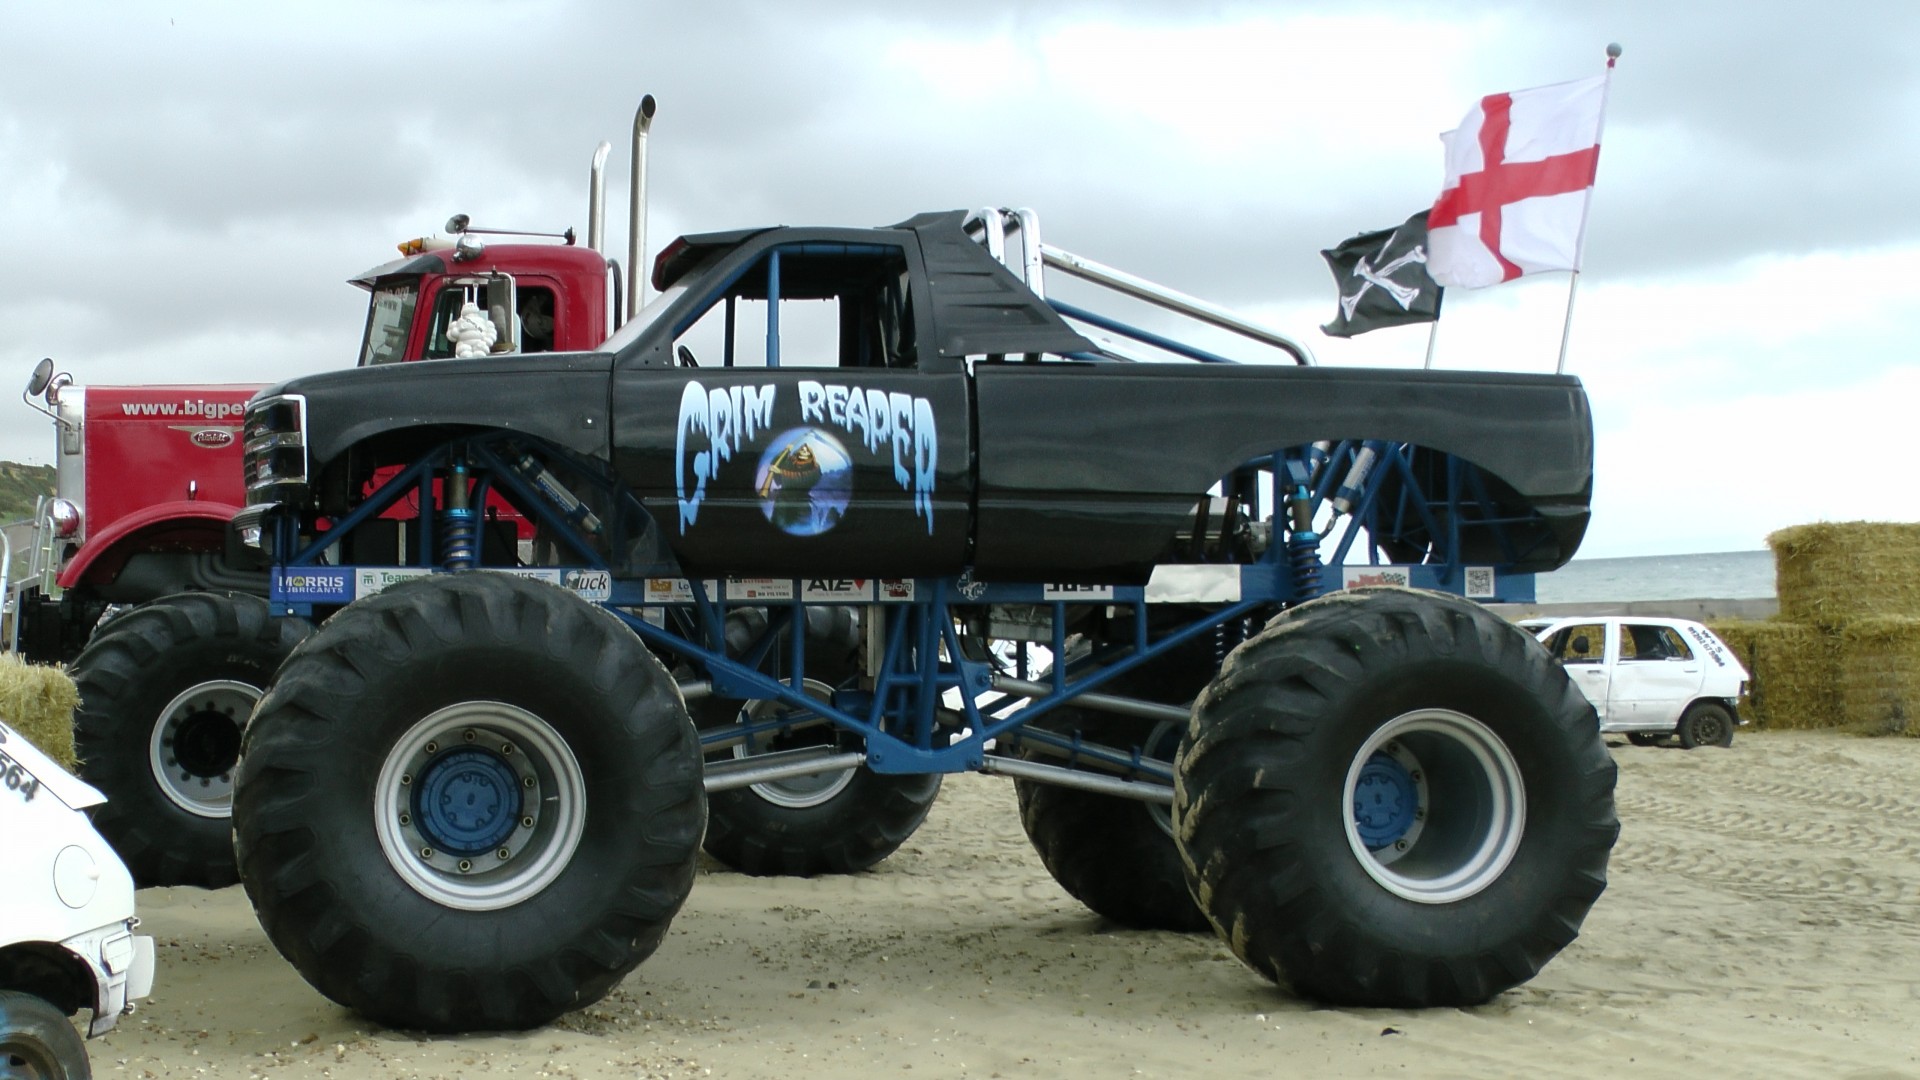 Grim Reaper Pickup Truck With Monster Wheels